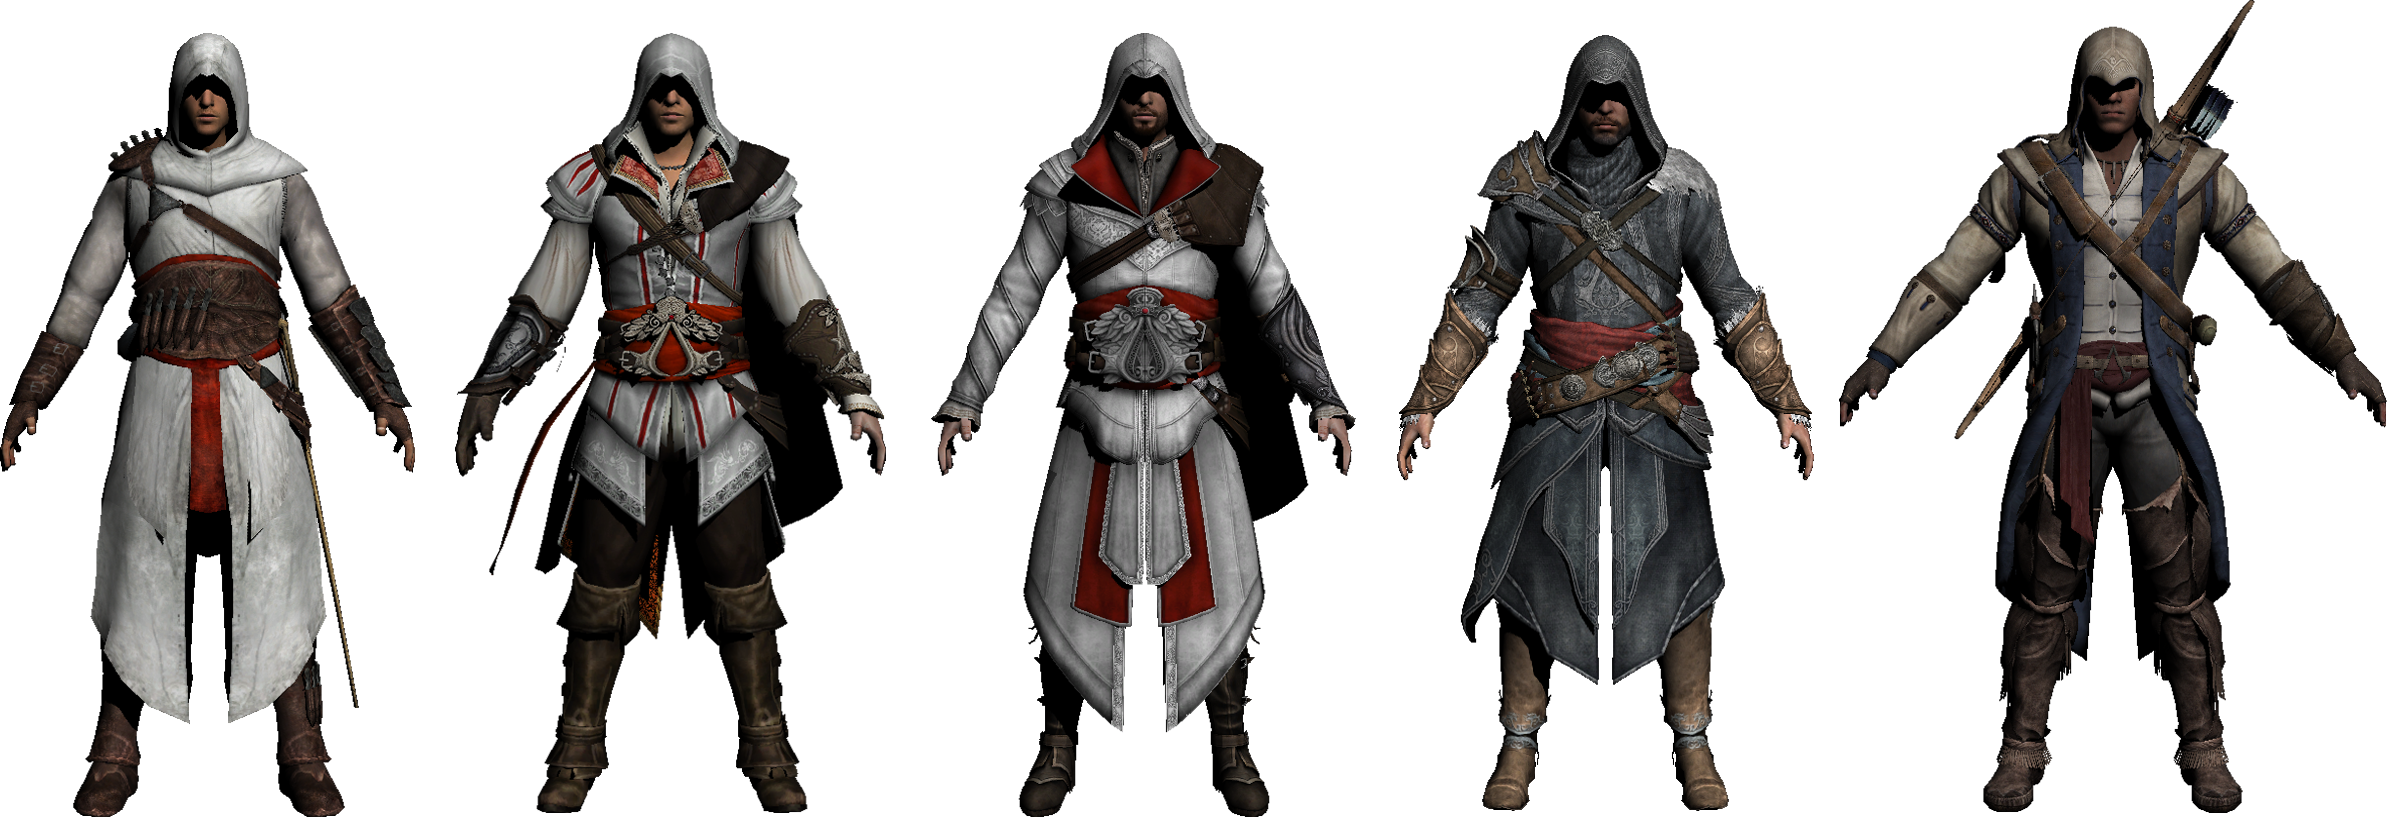 Assassin's Creed 2 Эцио броня. Костюм Эцио в Assassins Creed 2. Костюм Альтаира в Assassins Creed 3. Ассасин Крид 2 костюм Эцио.